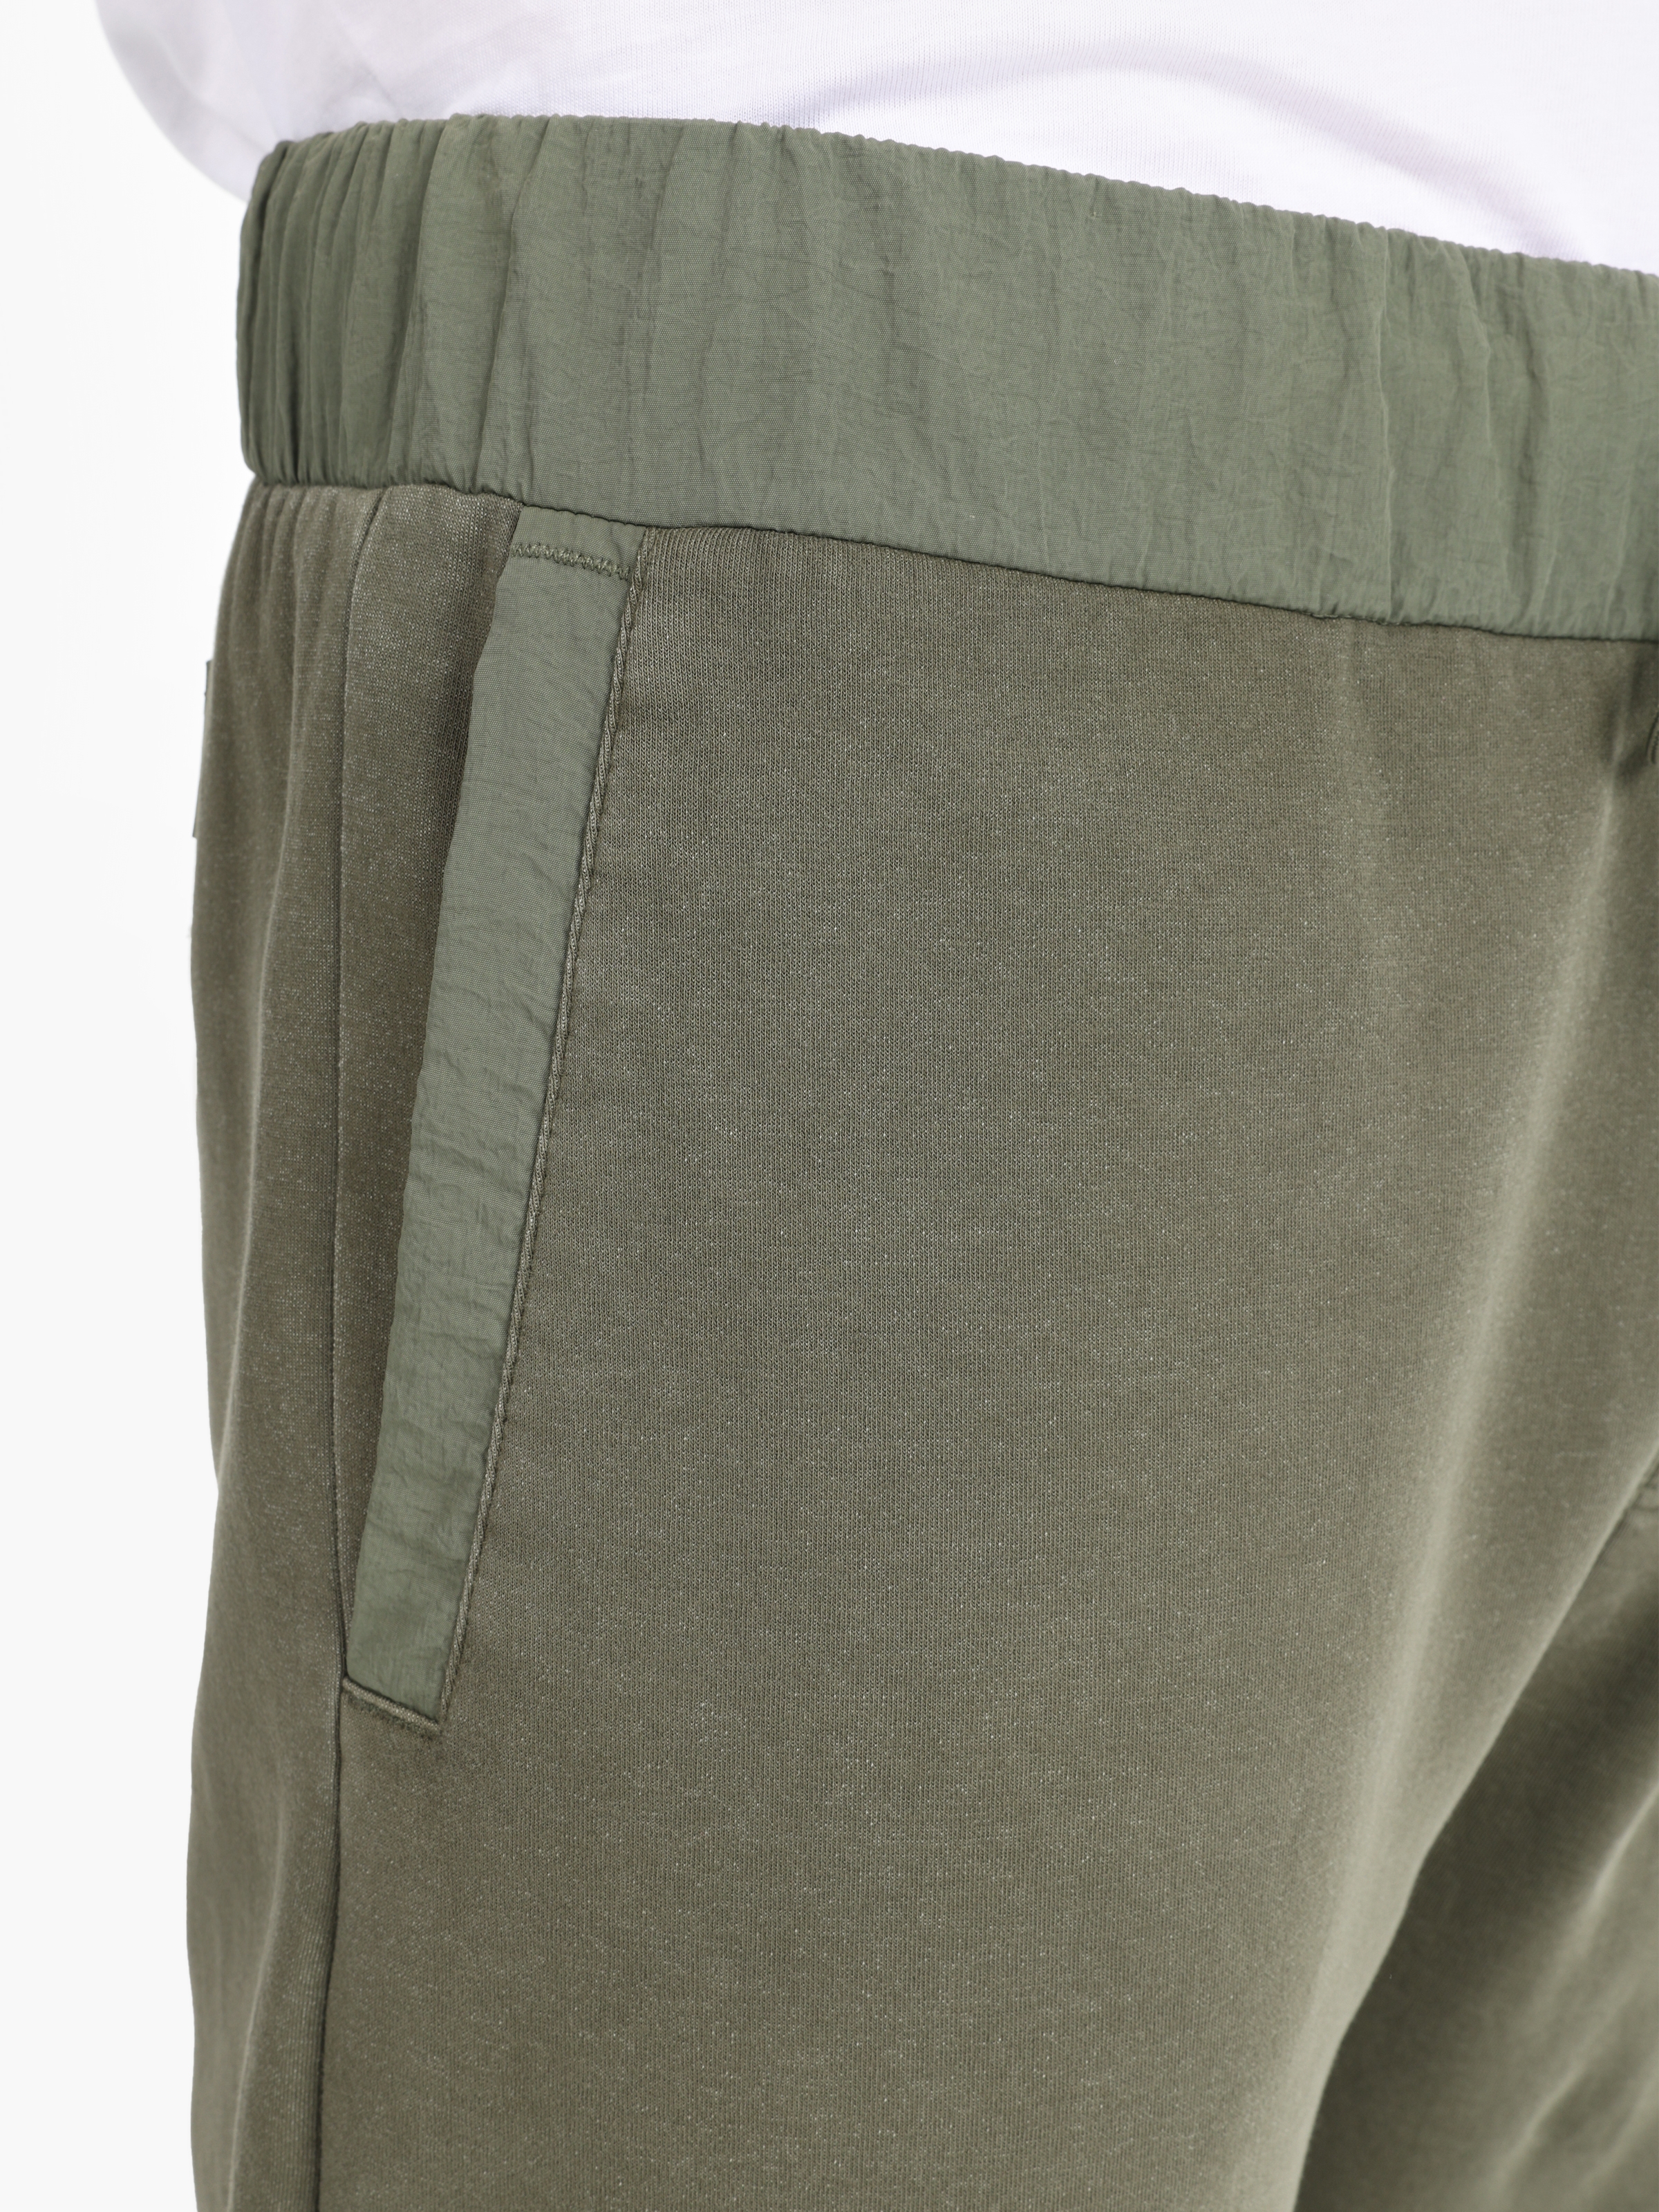 Afișați detalii pentru Pantaloni De Trening De Barbati Kaki Regular Fit  